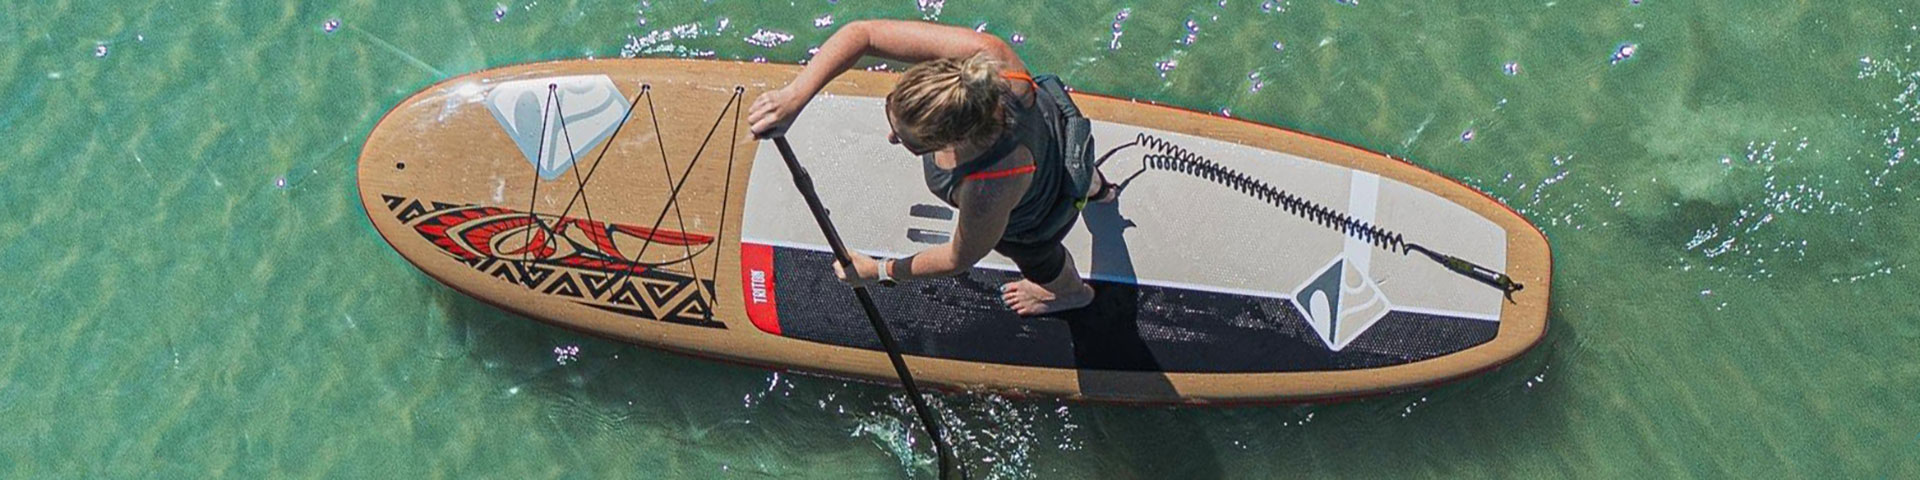 Boardworks Triton 10'6" all-around standup paddleboard